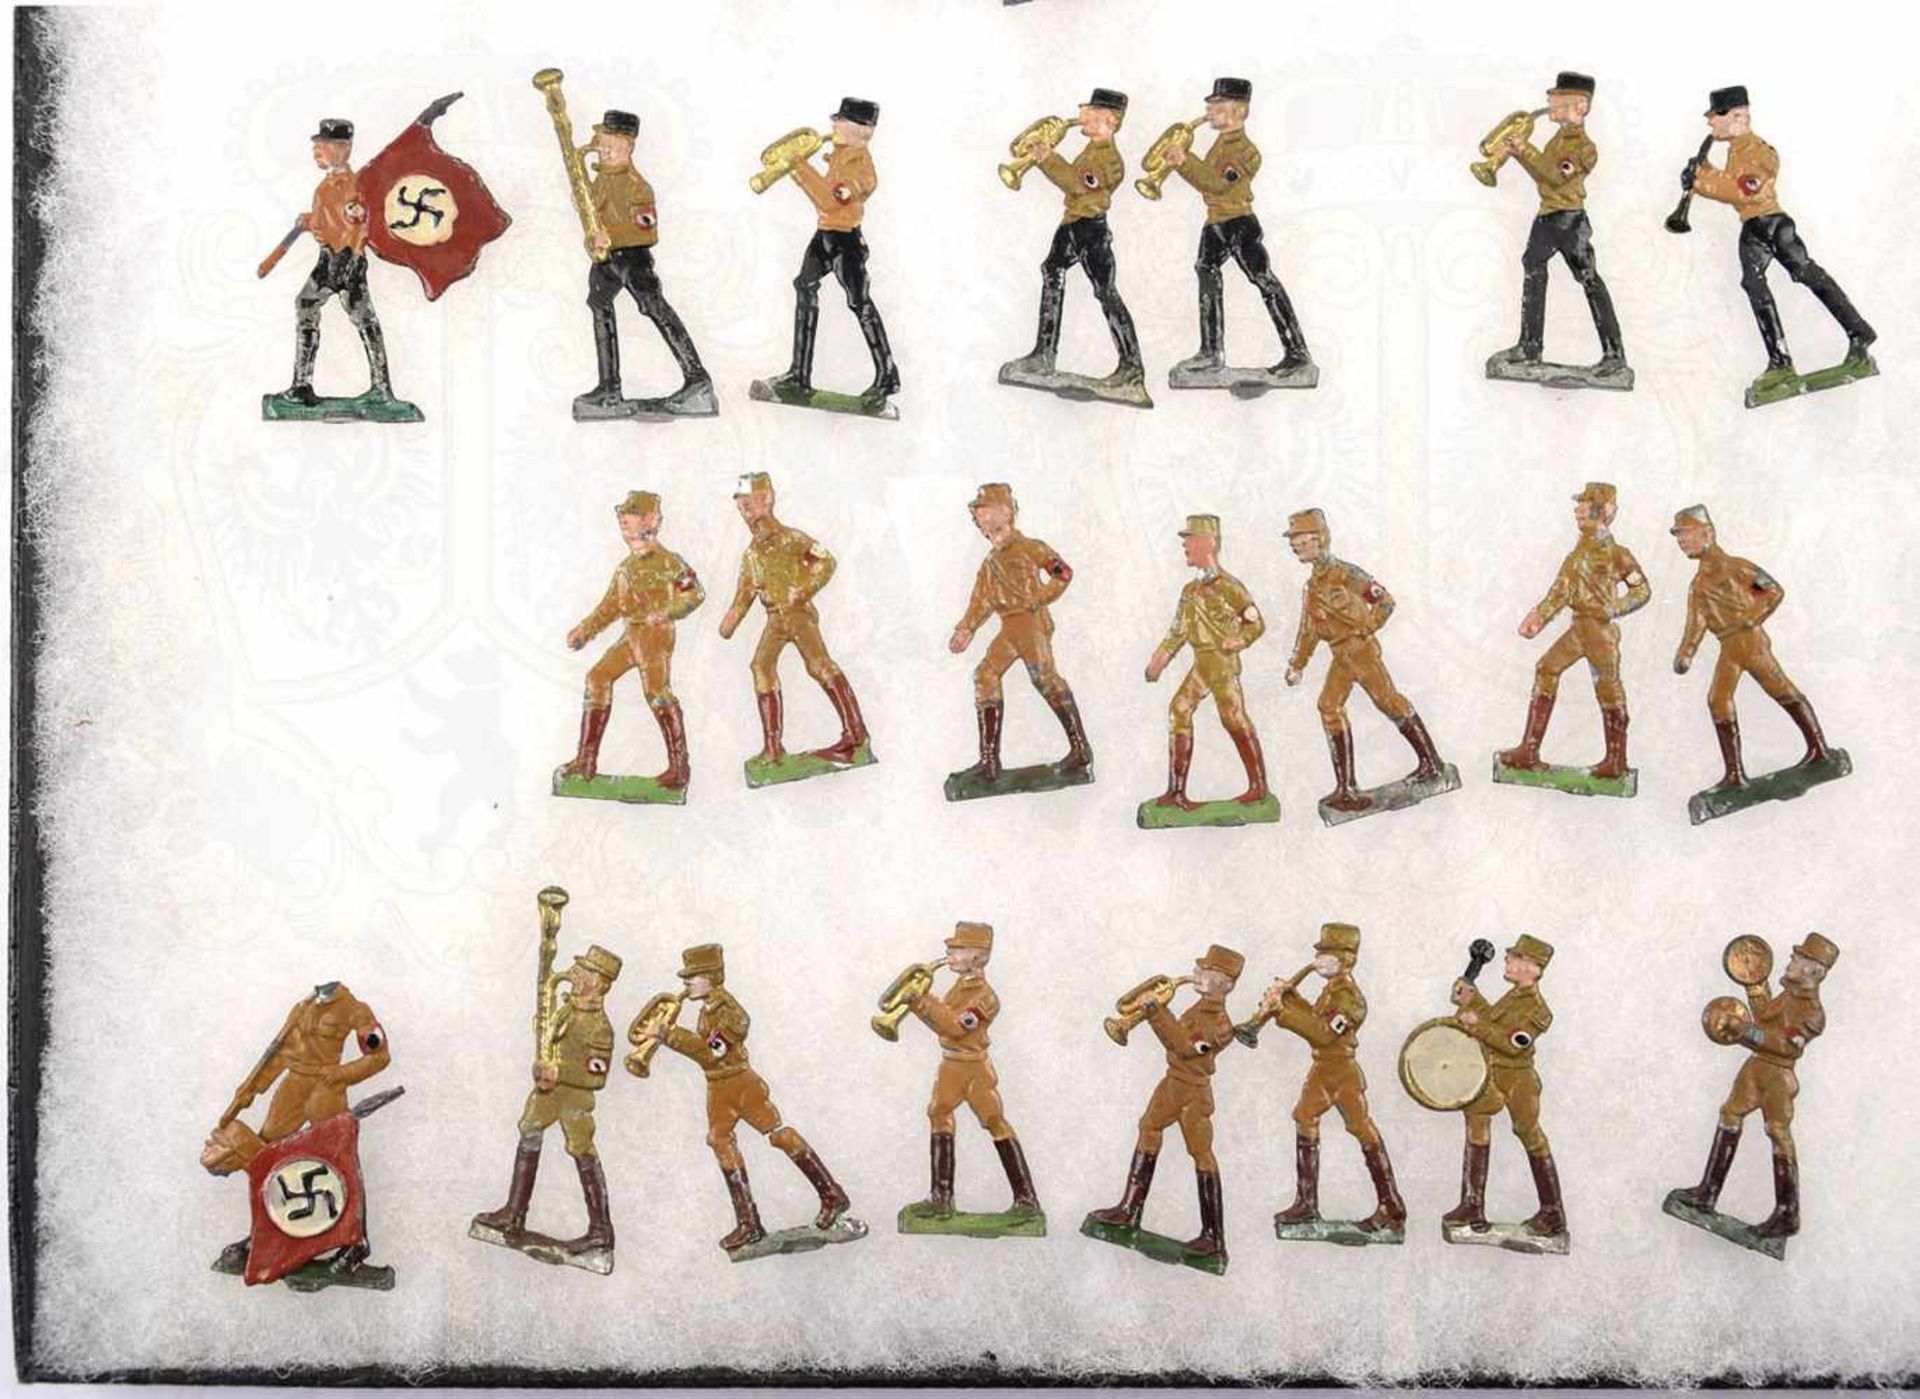 59 FLACHFIGUREN Zinn, farbig bemalt, dabei: marschierende SA-Mannschaften verschiedener Gebiete, - Bild 2 aus 4